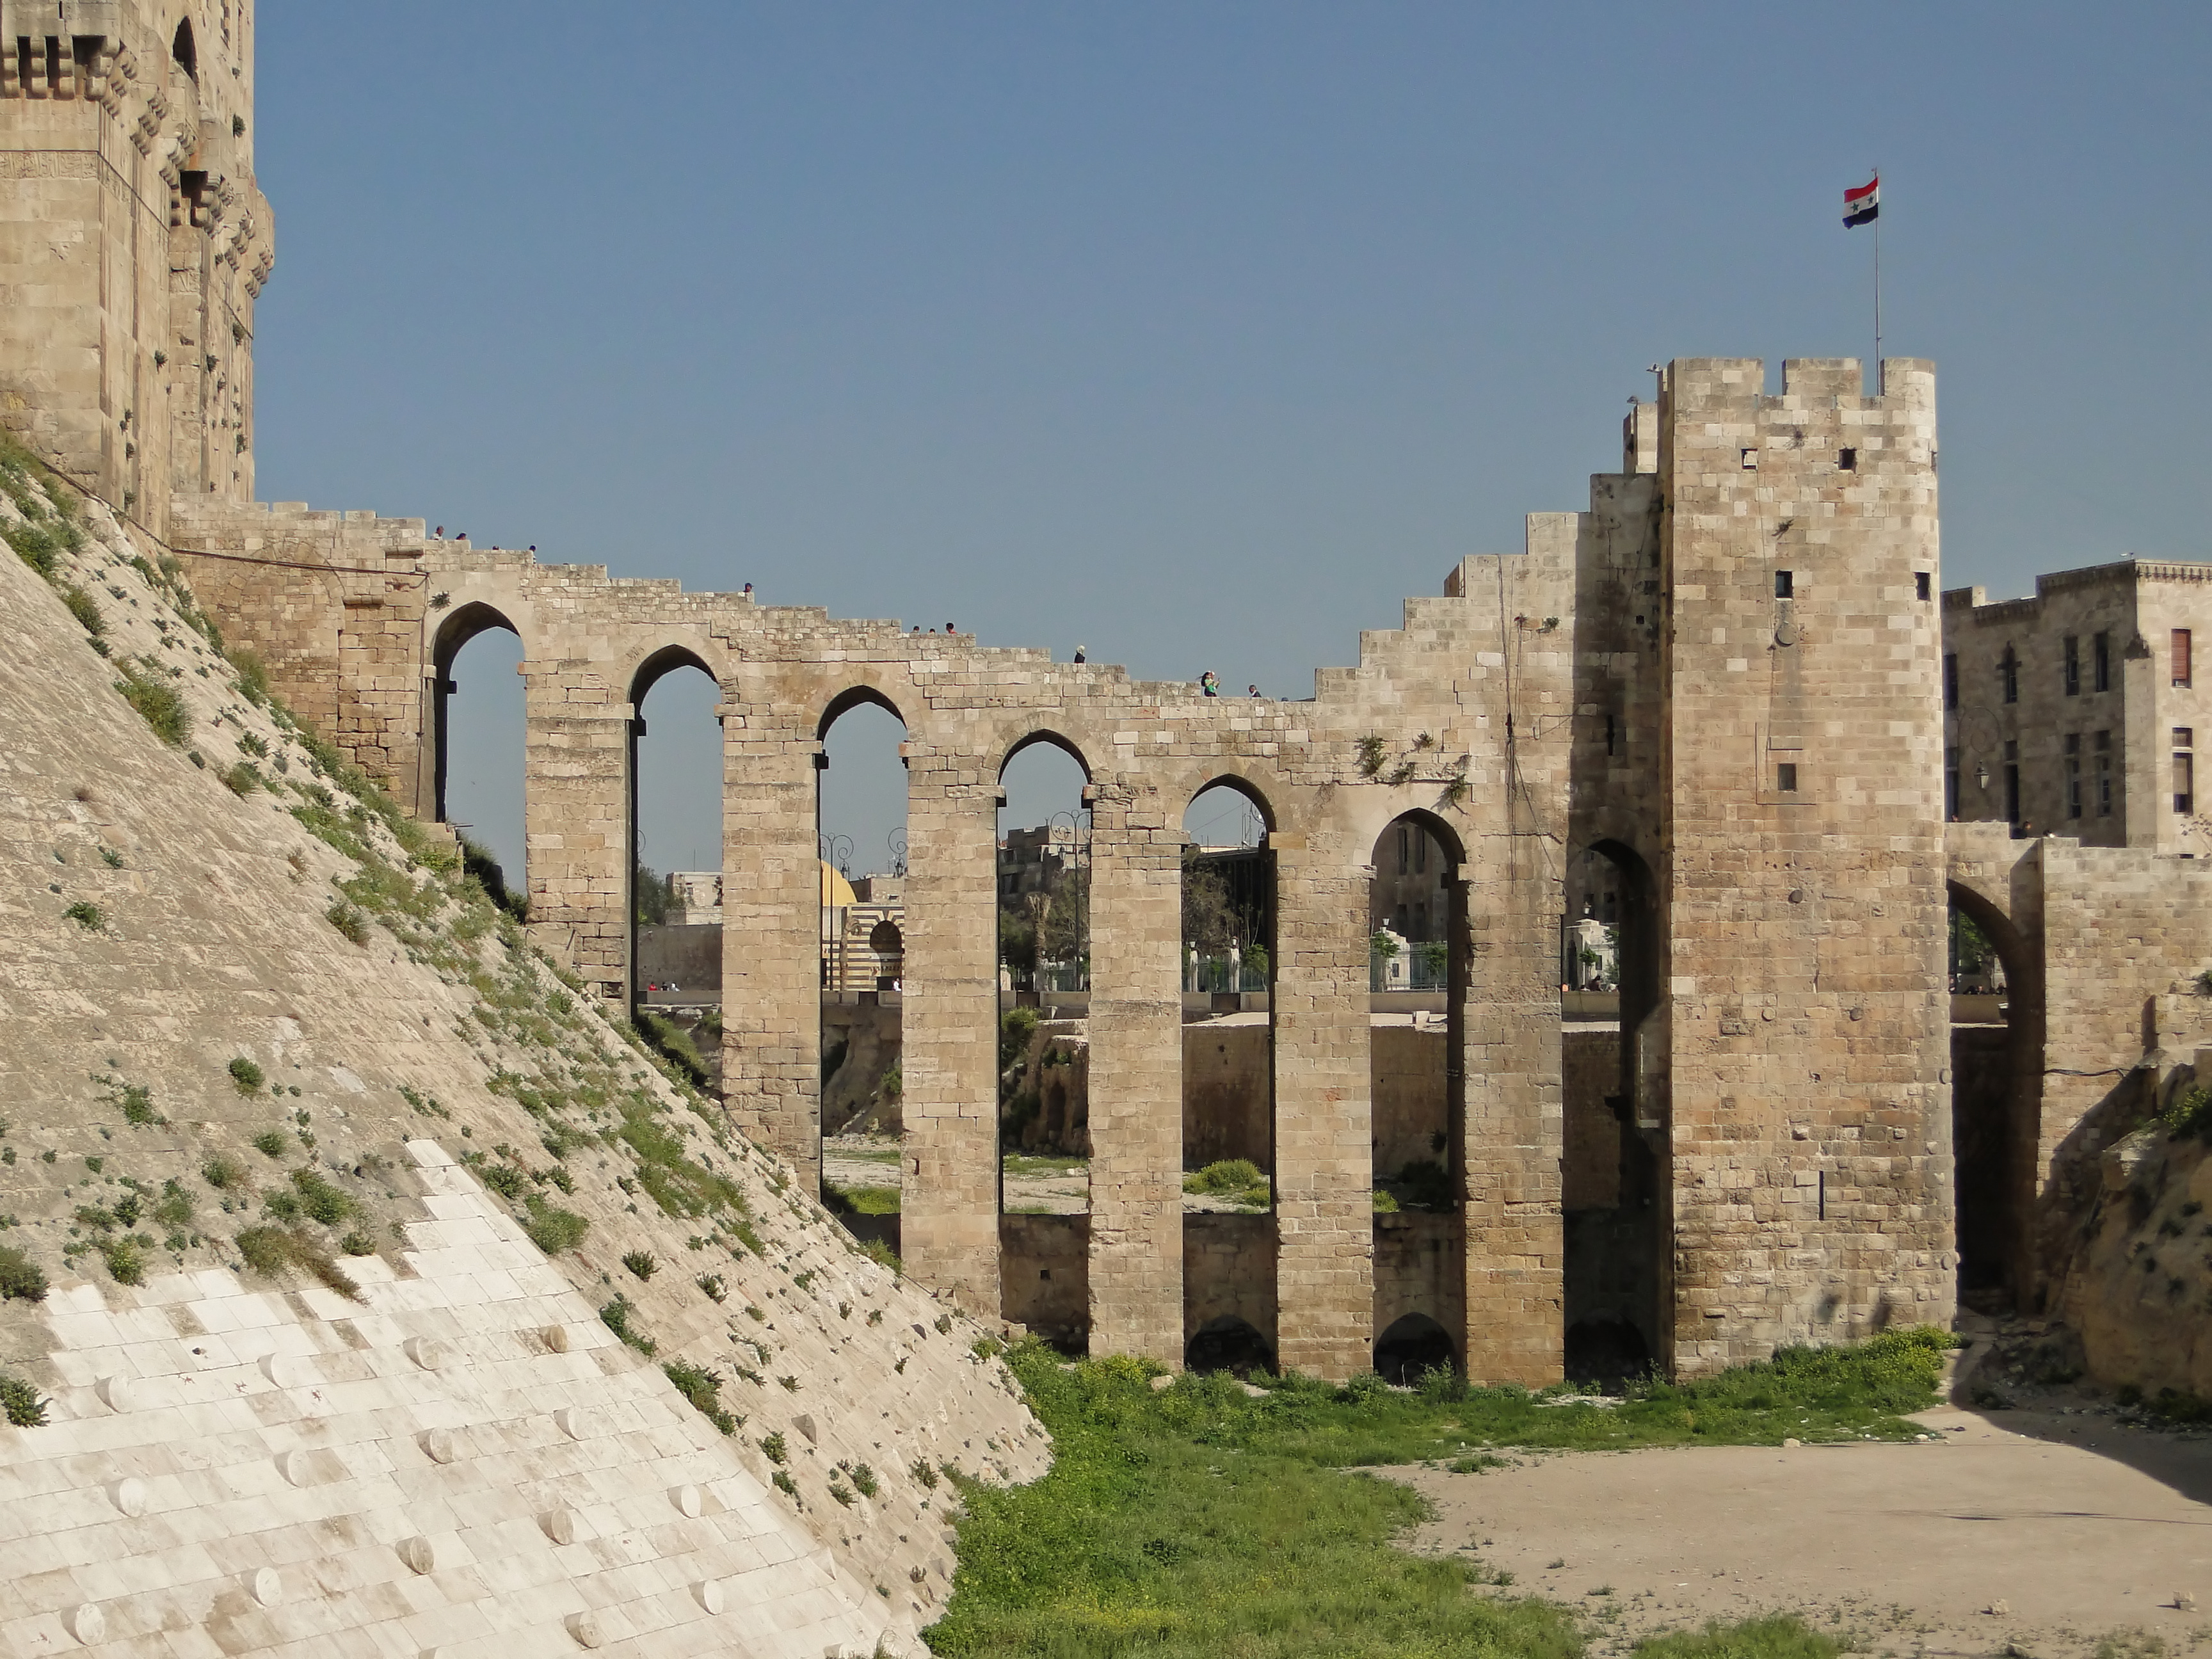 Aleppo Citadel 26 - Bridge